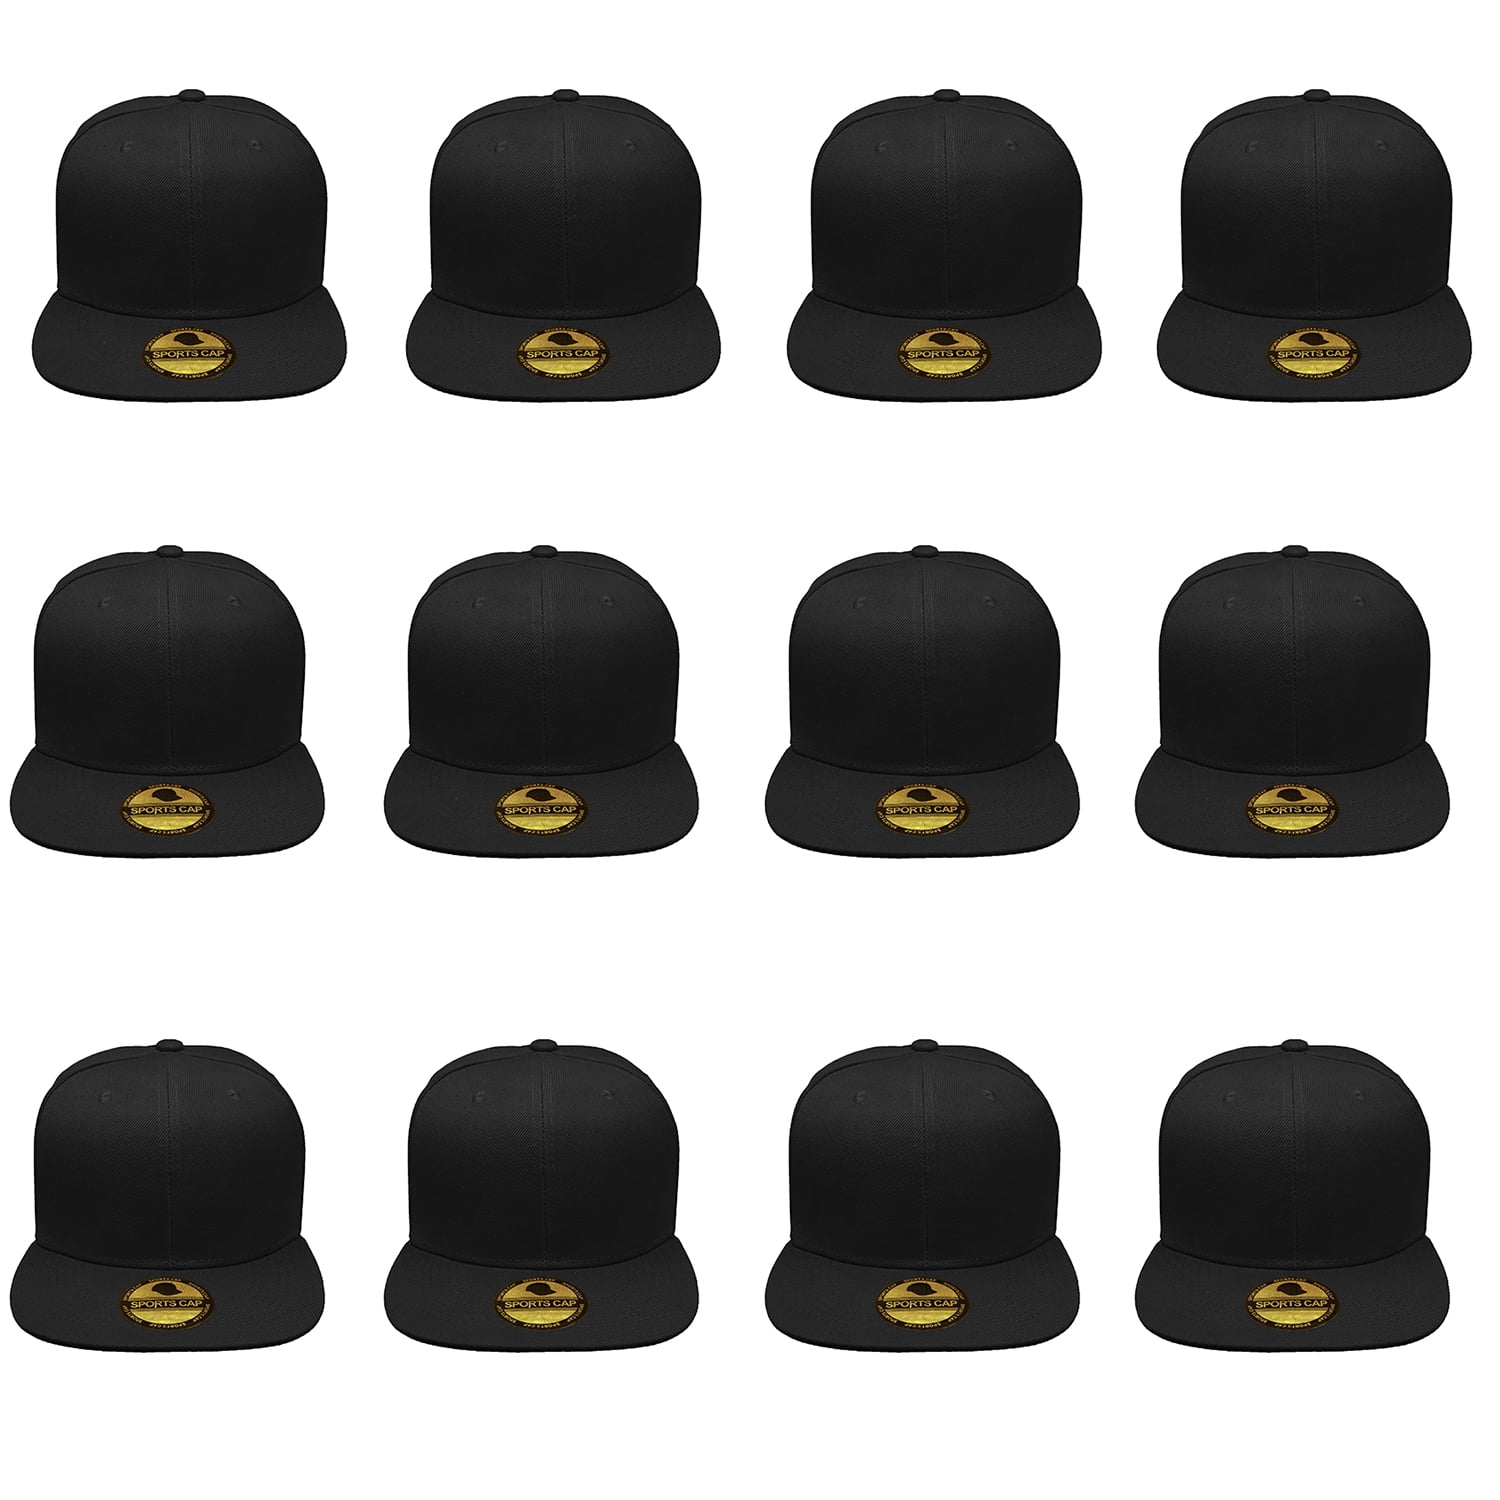 Wholesale Job Lot Black Thermal Hats Brand New 